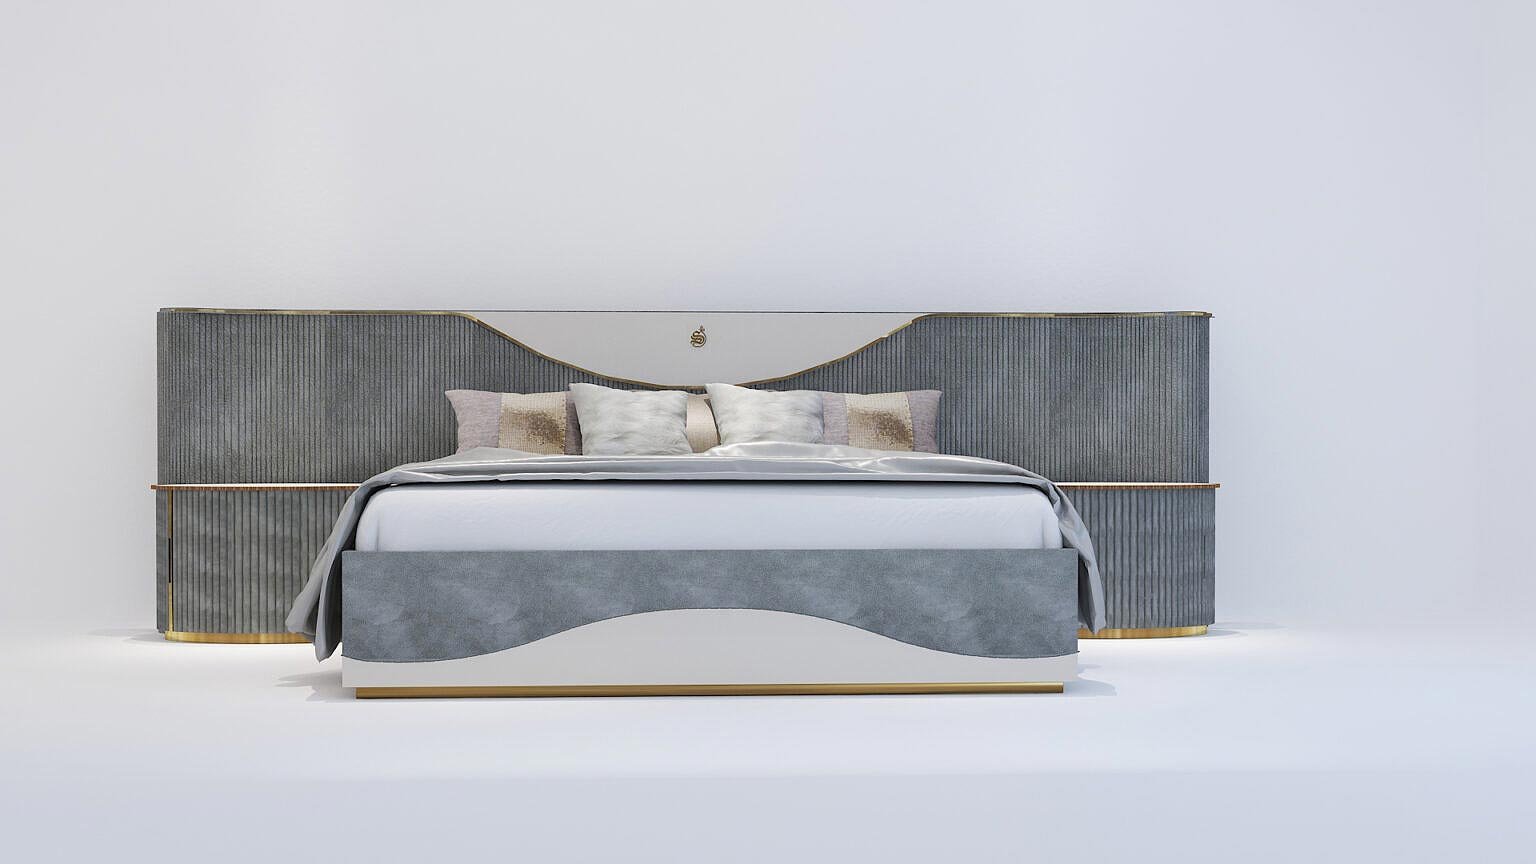 Jelly fish bed _ furniture _ shruti sodhi interior designs.